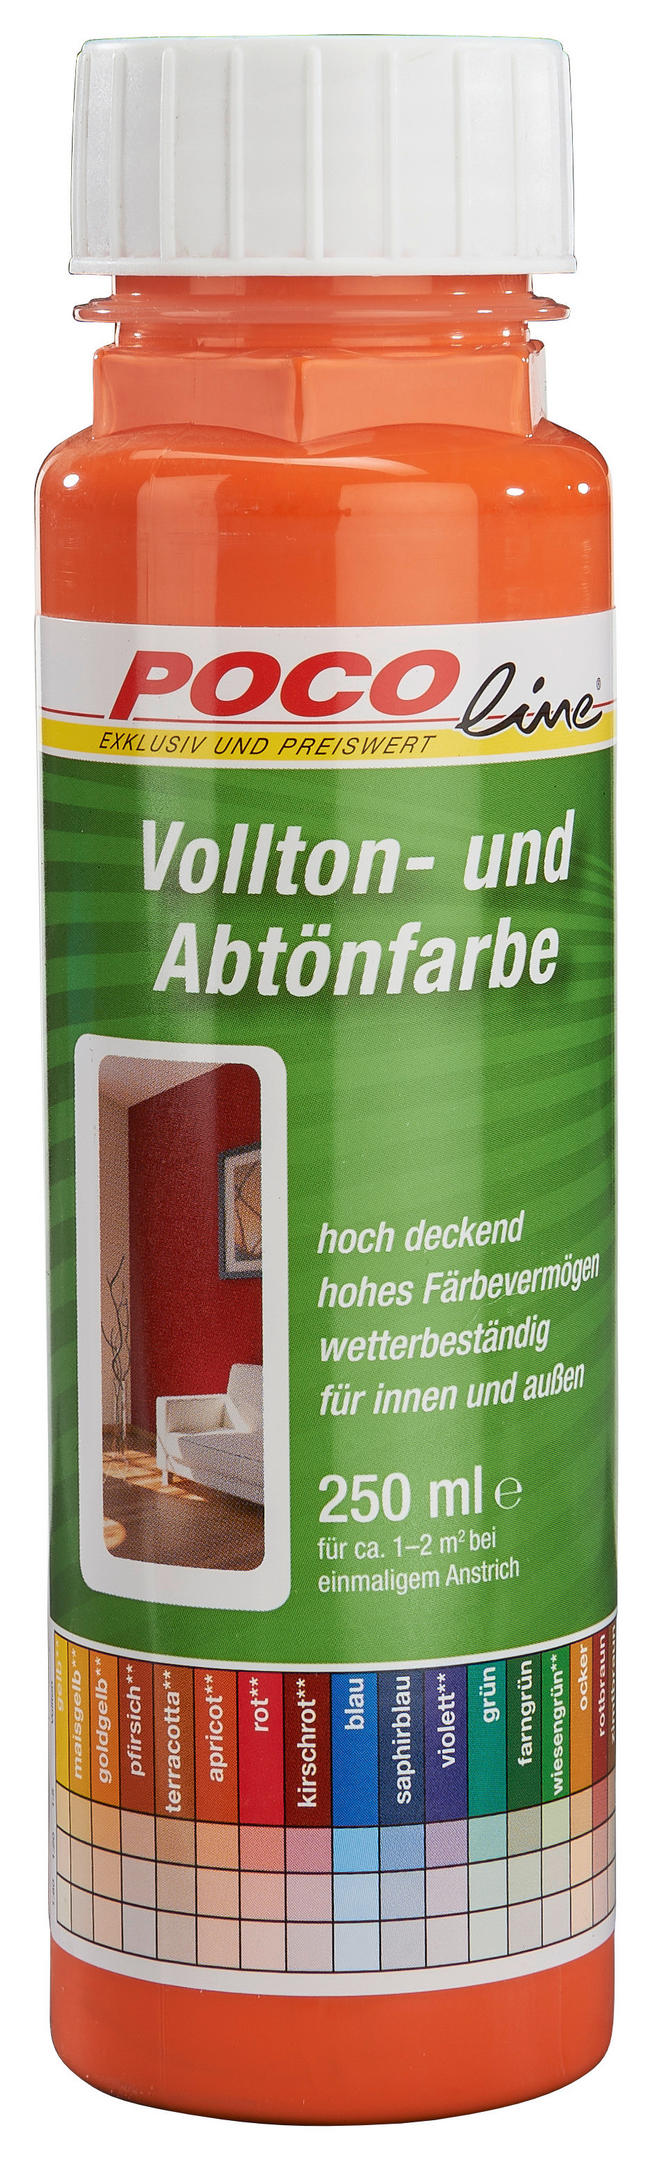 POCOline Vollton- und Abtönfarbe apricot ca. 0,25 l Voll+Abtönfarbe 250ml apricot - apricot (250ml) - POCOline